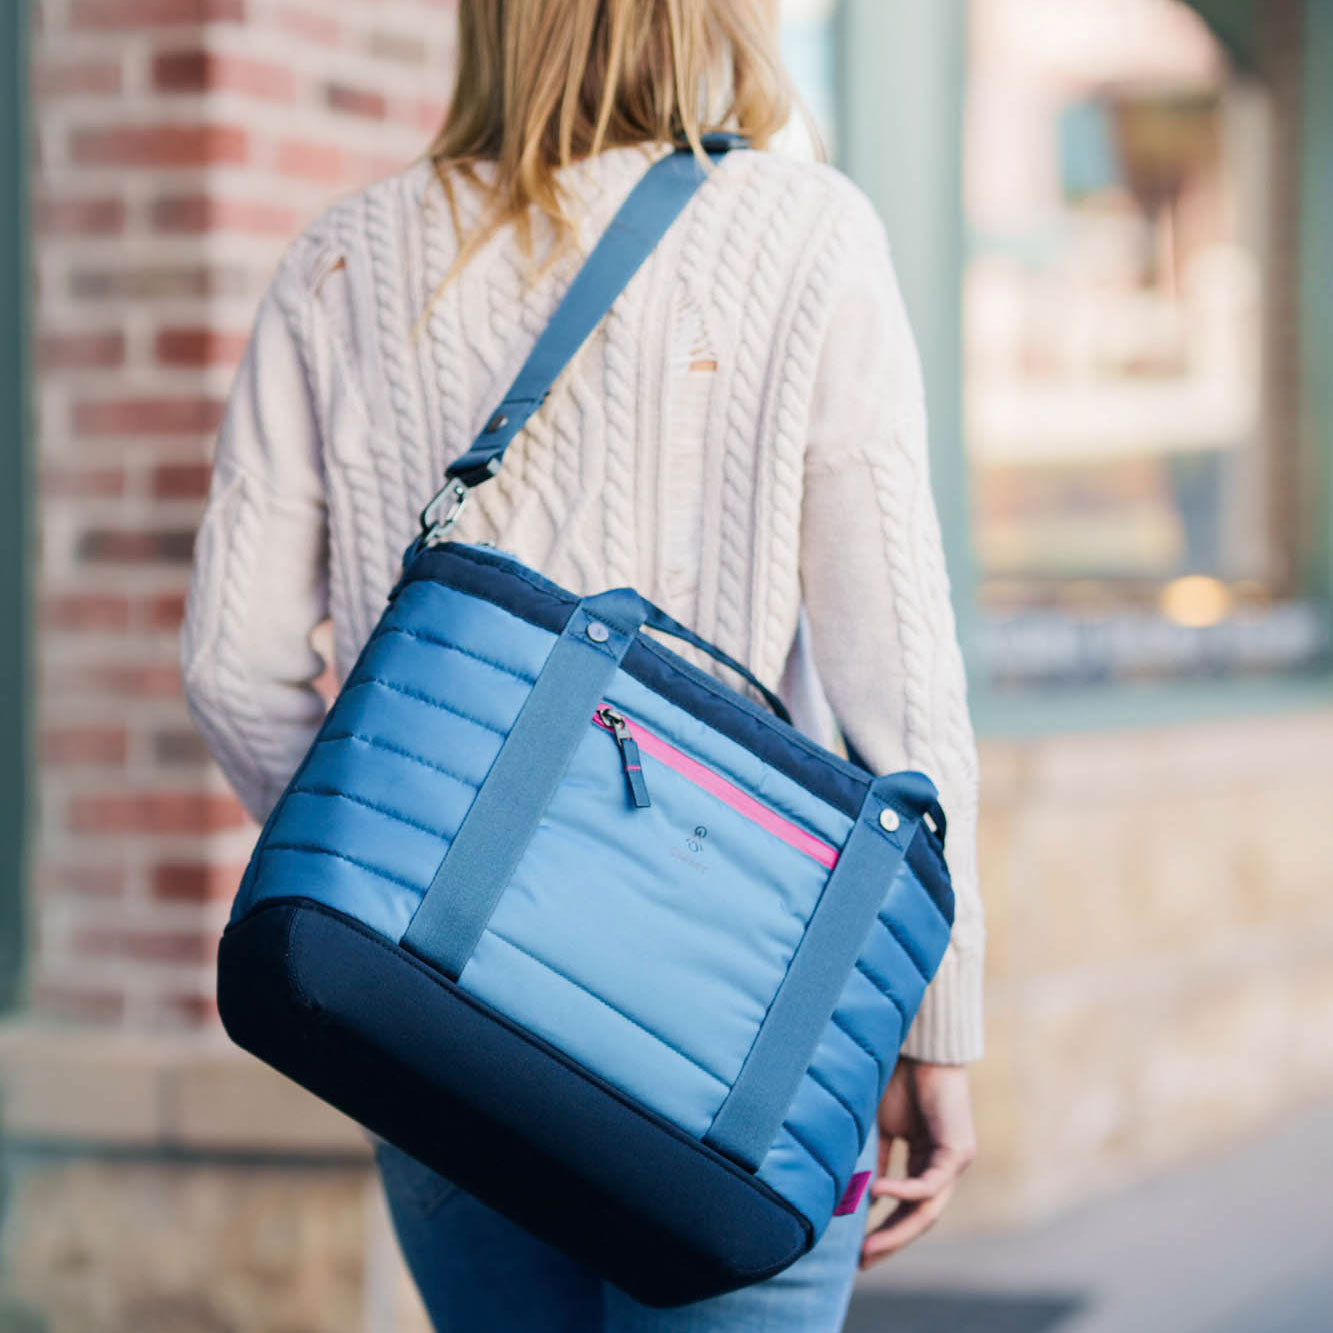 Woman carrying the blue smmt 20 liter tote bag over her shoulder